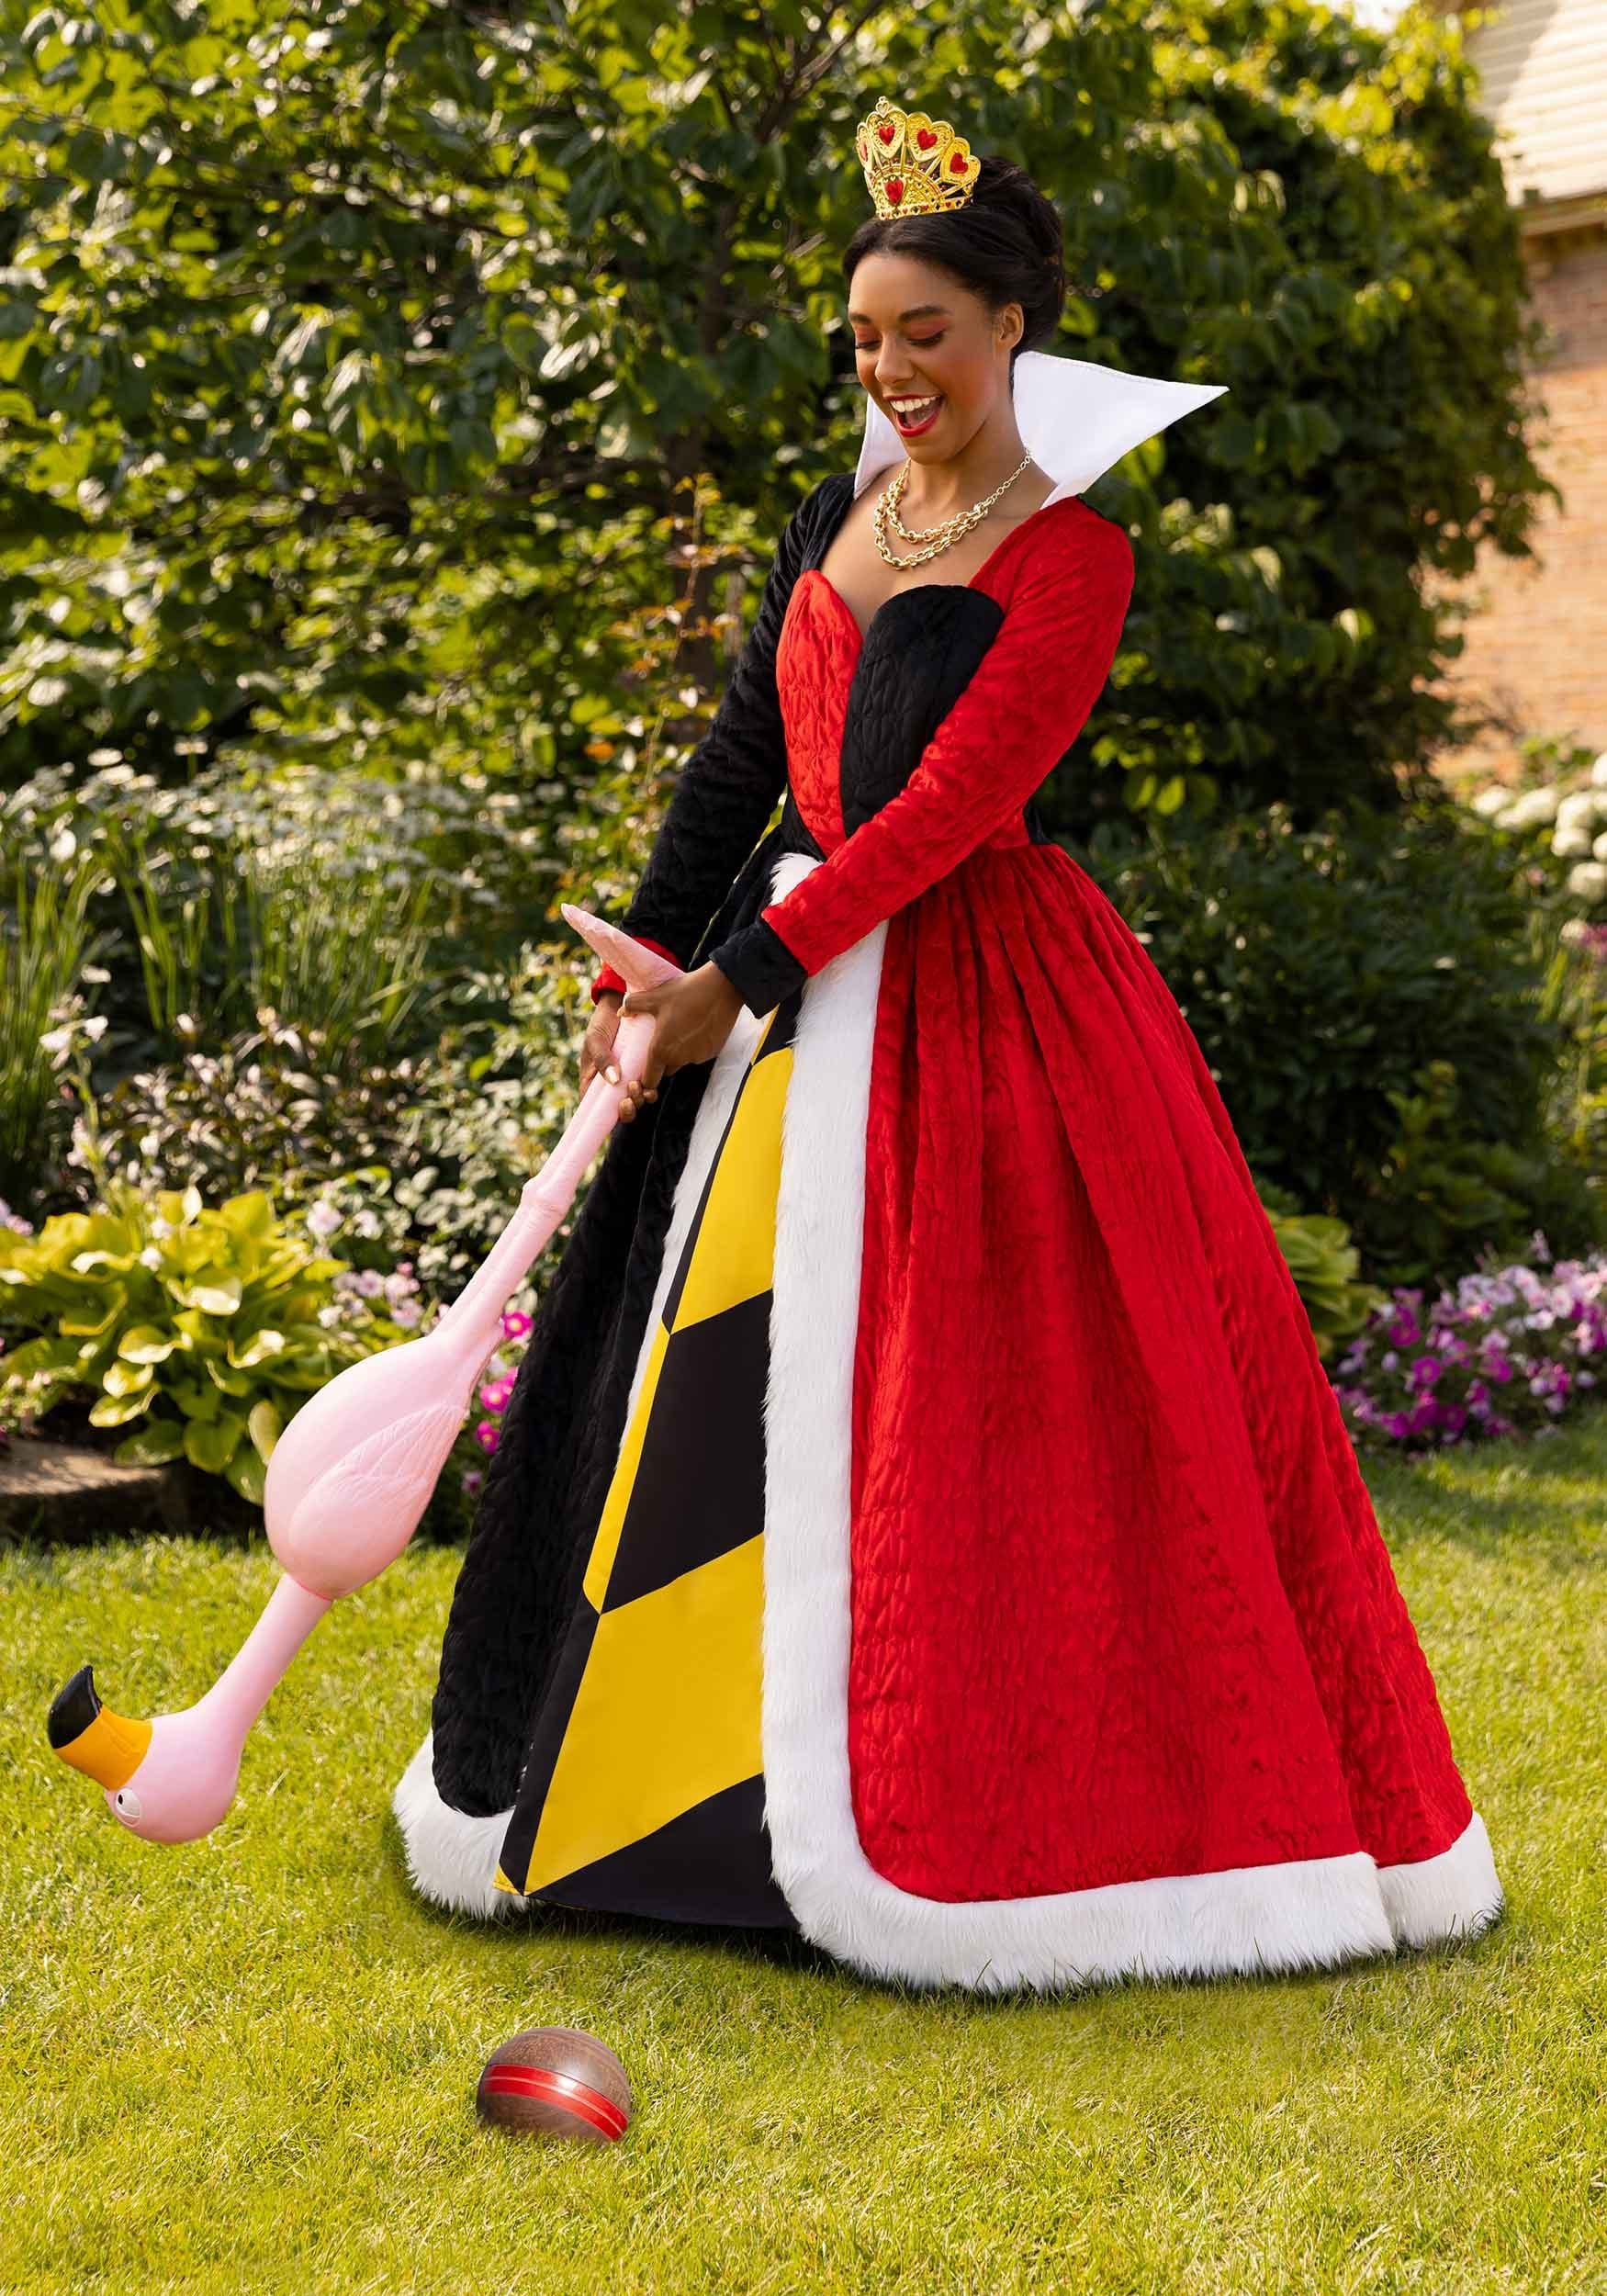 Authentic Disney Queen Of Hearts Costume For Women